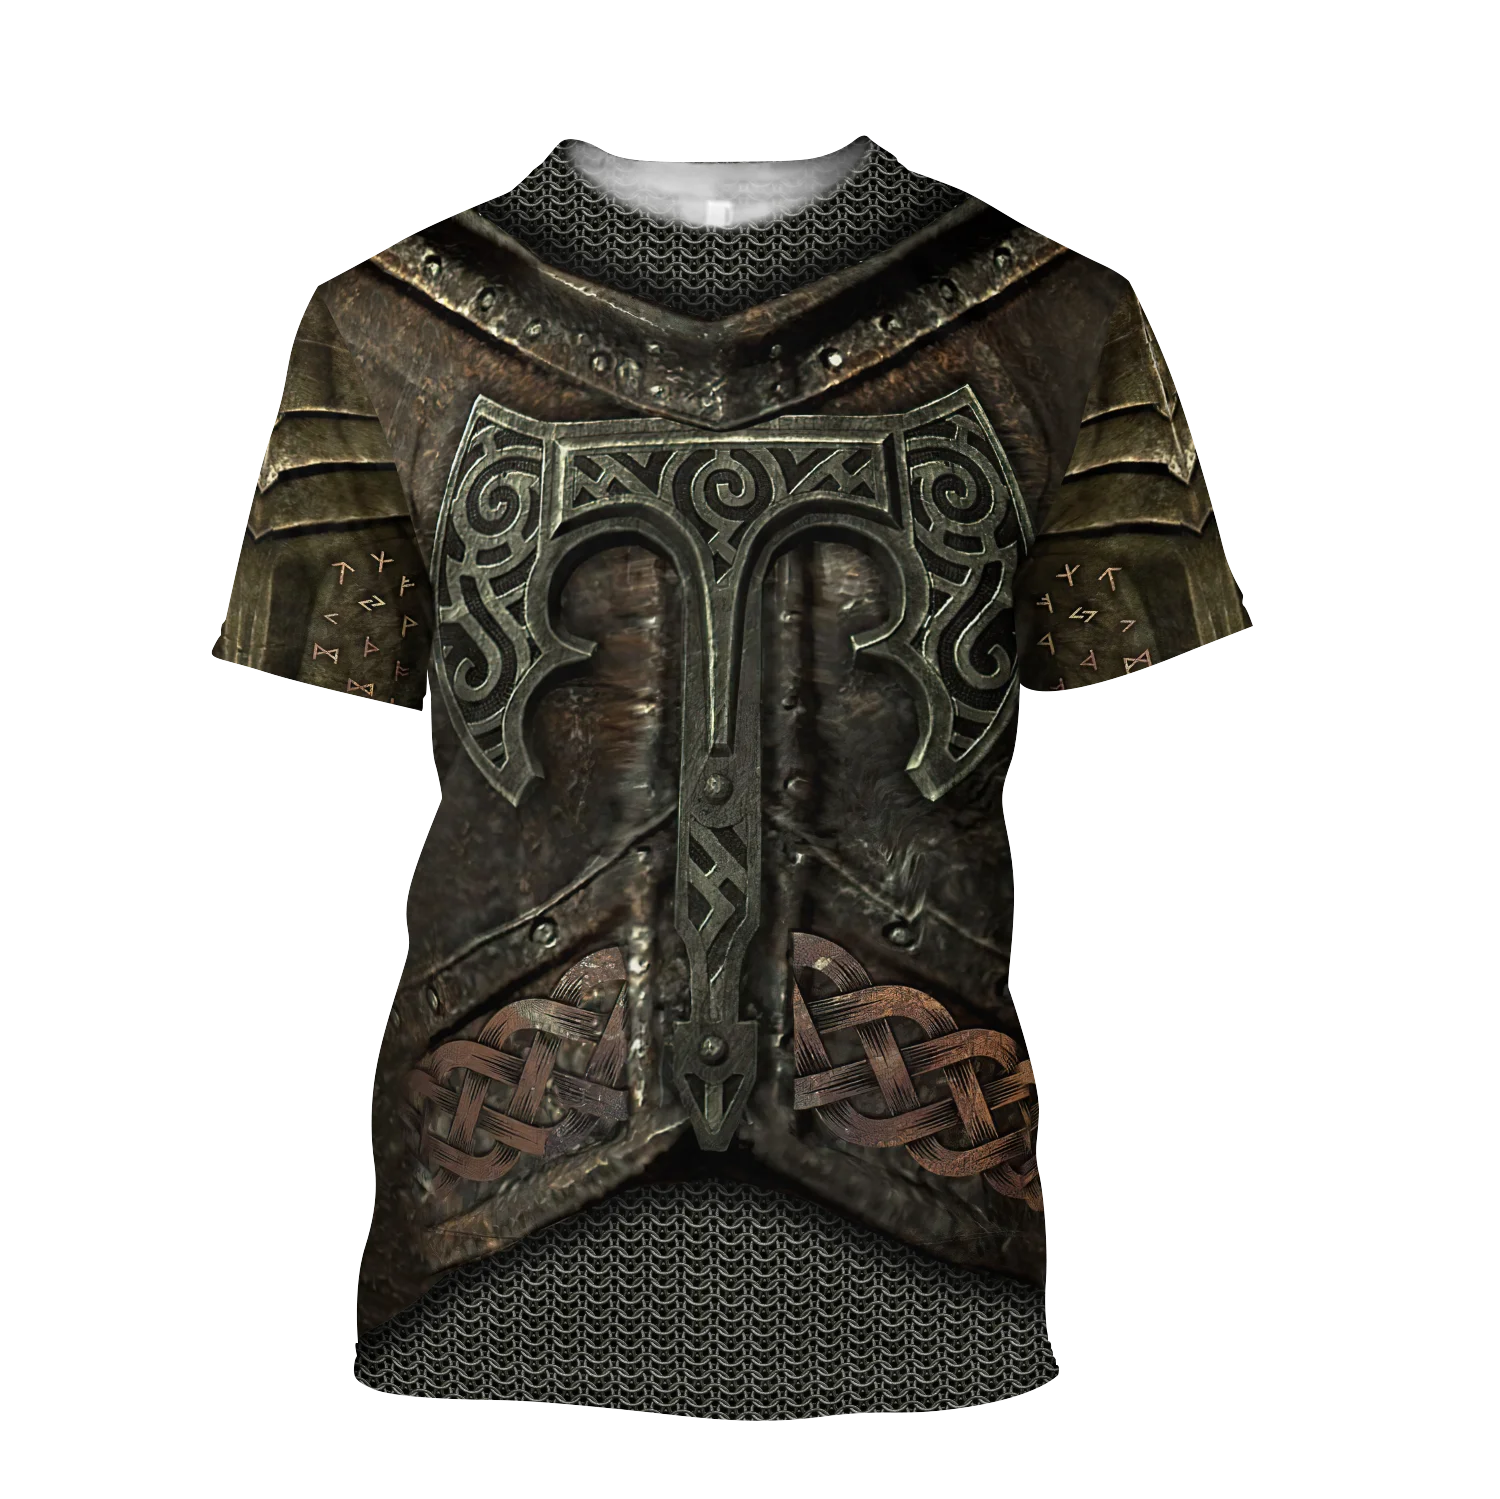 Viking Armor 3D Printed T-shirt